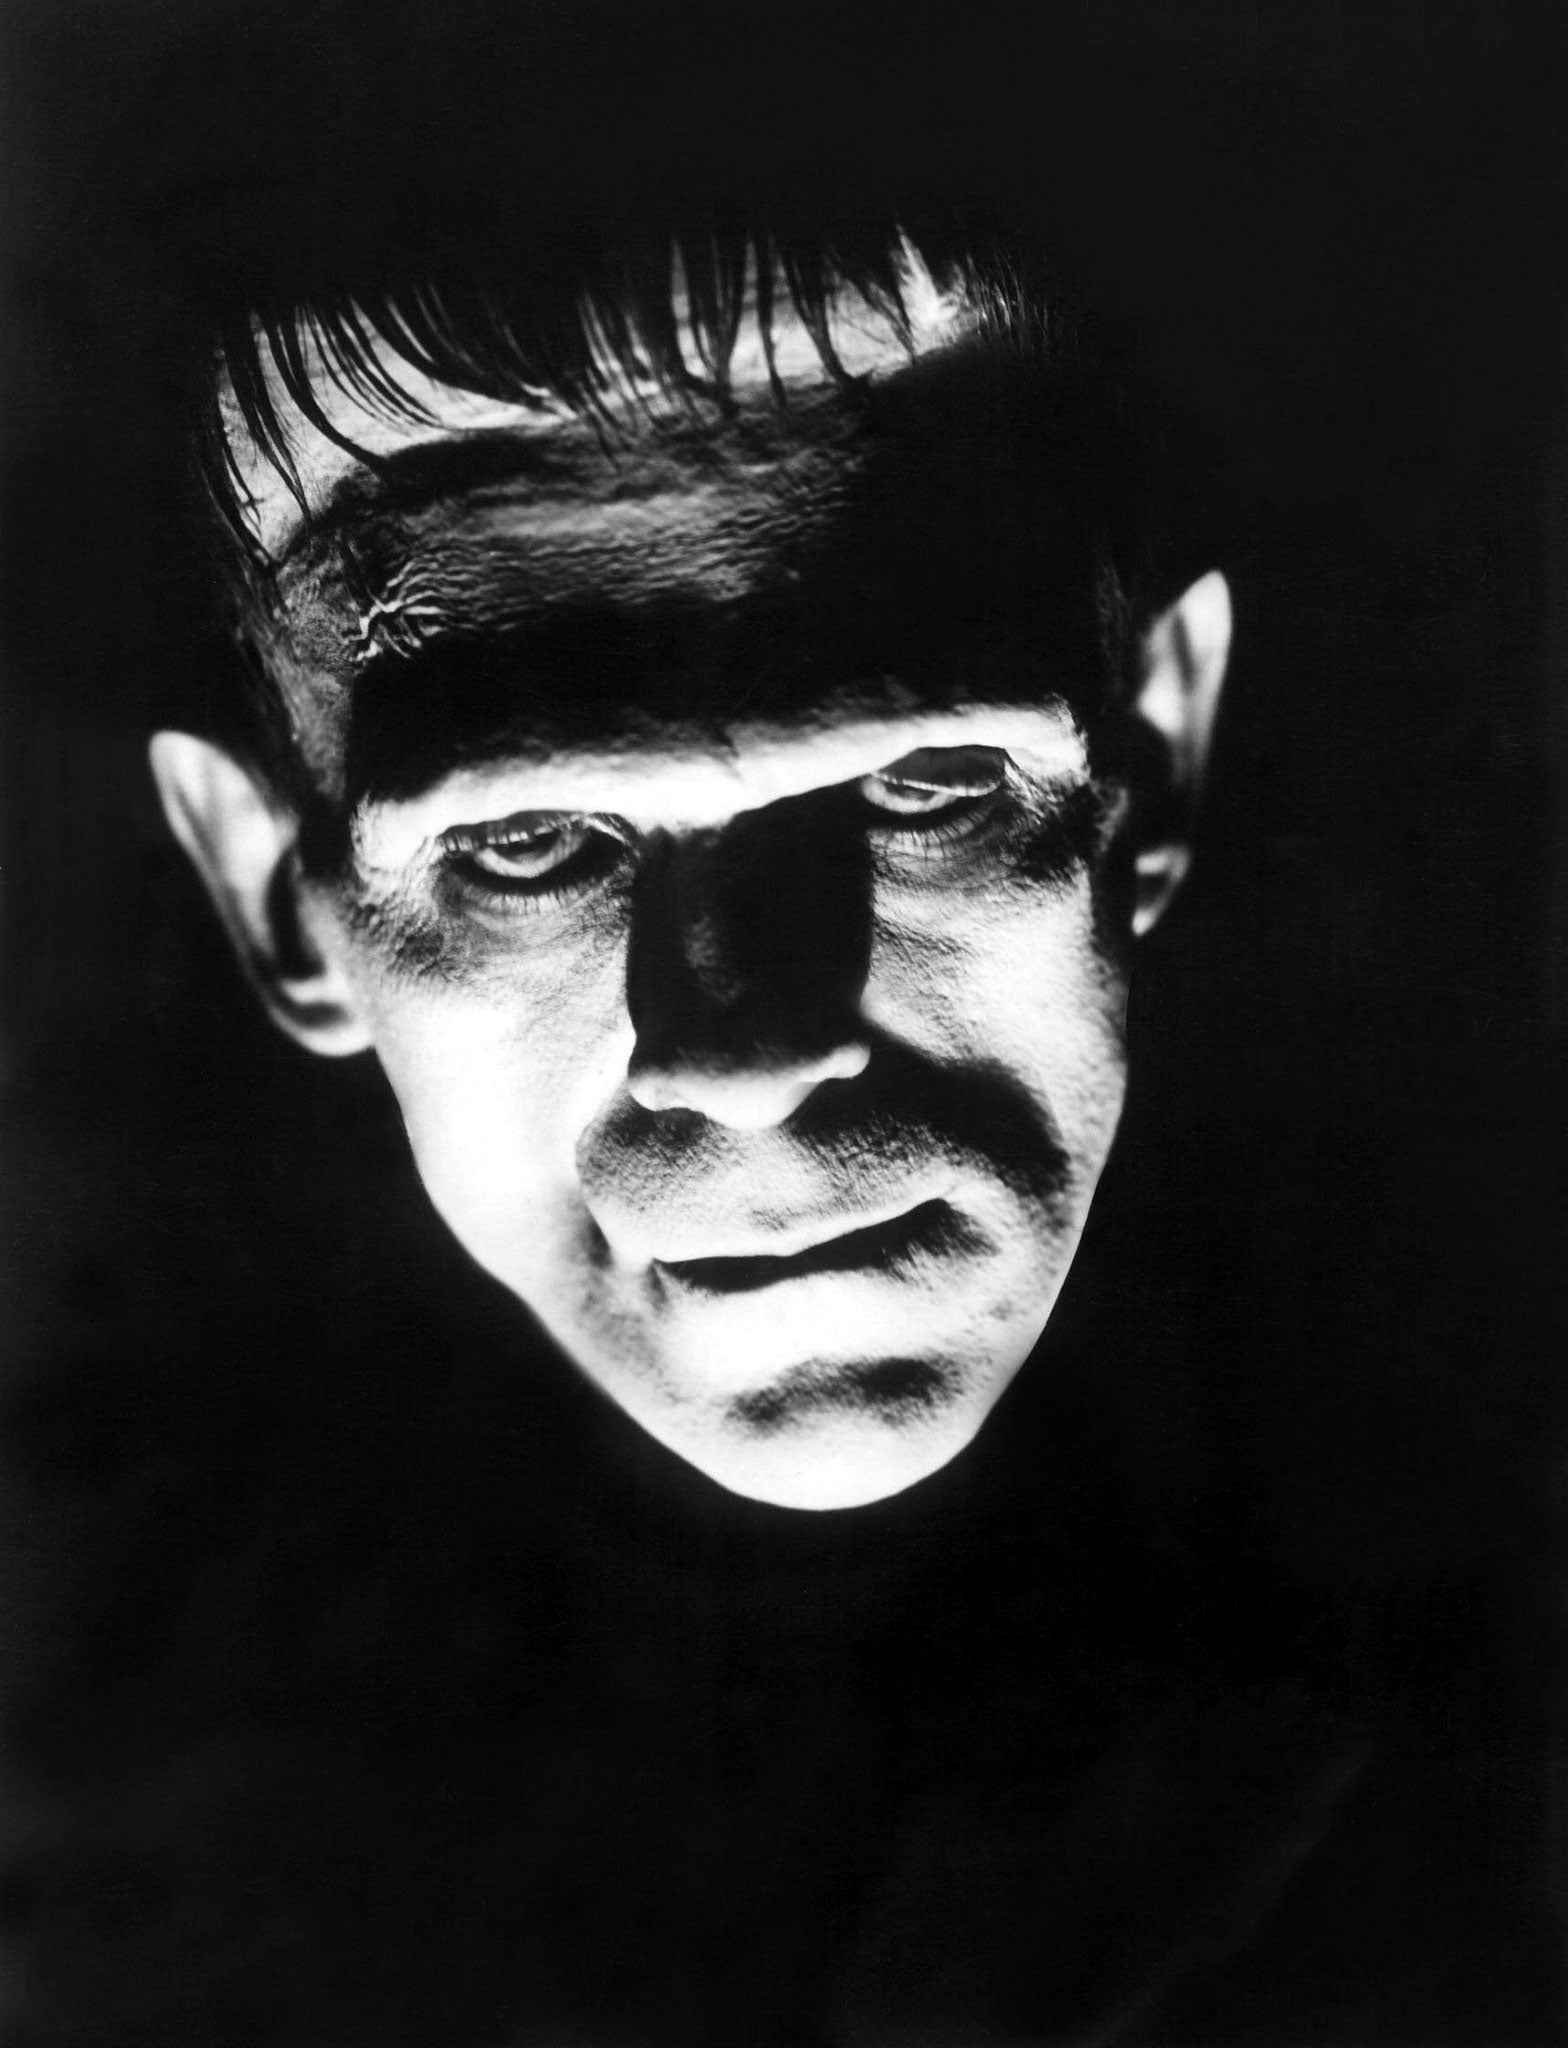 Boris Karloff as Frankenstein's monster in 1931